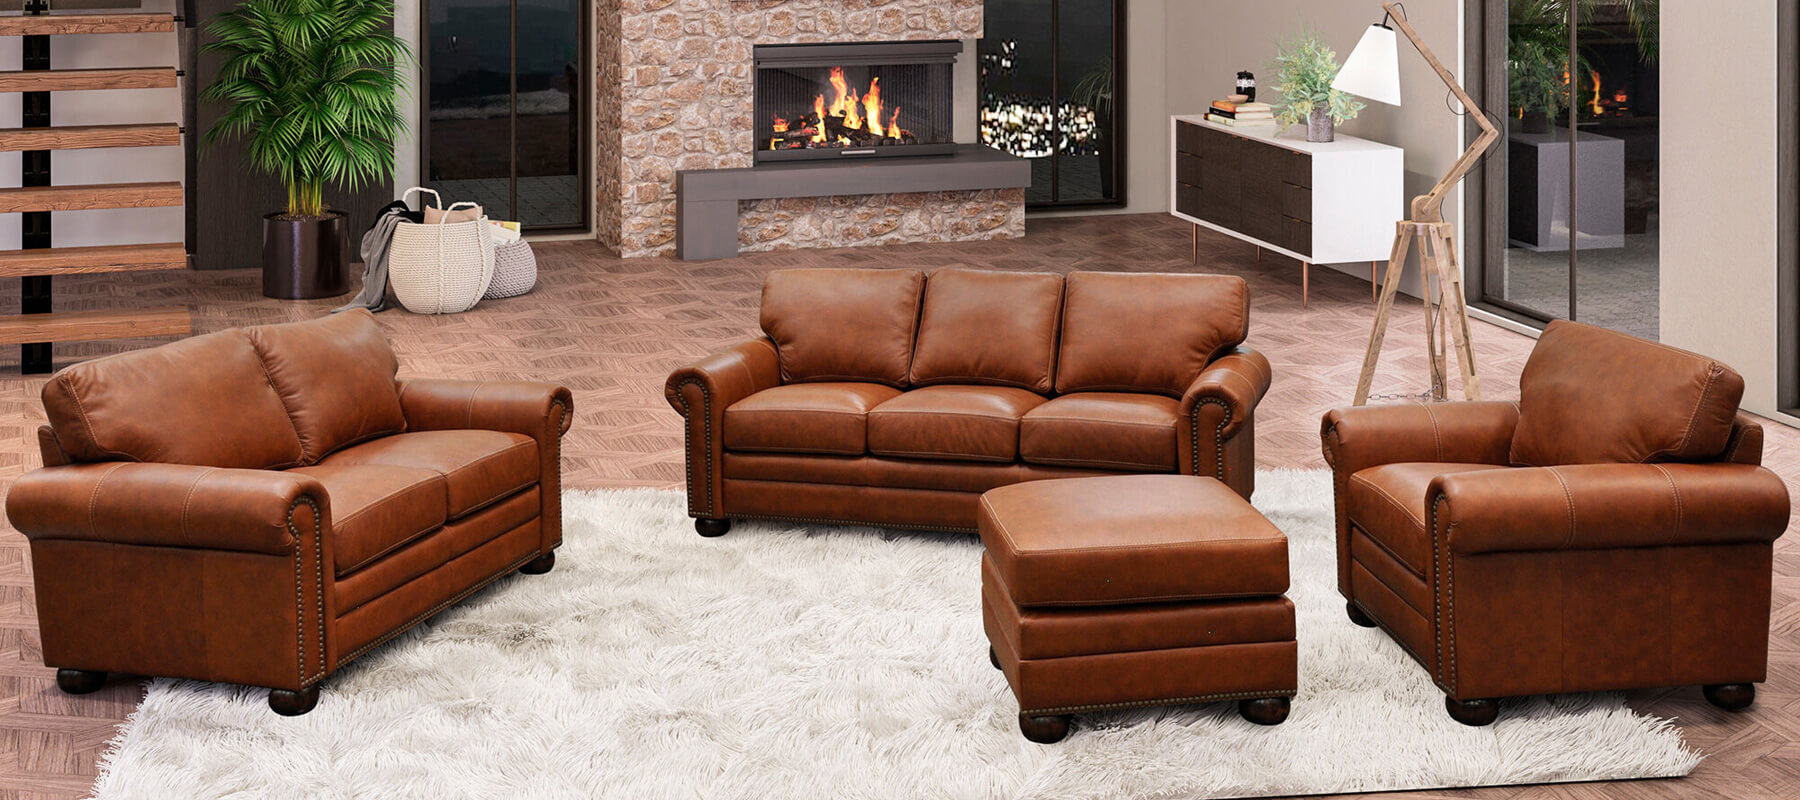 Brown leather furniture set sold at Hayek's Leather Furniture